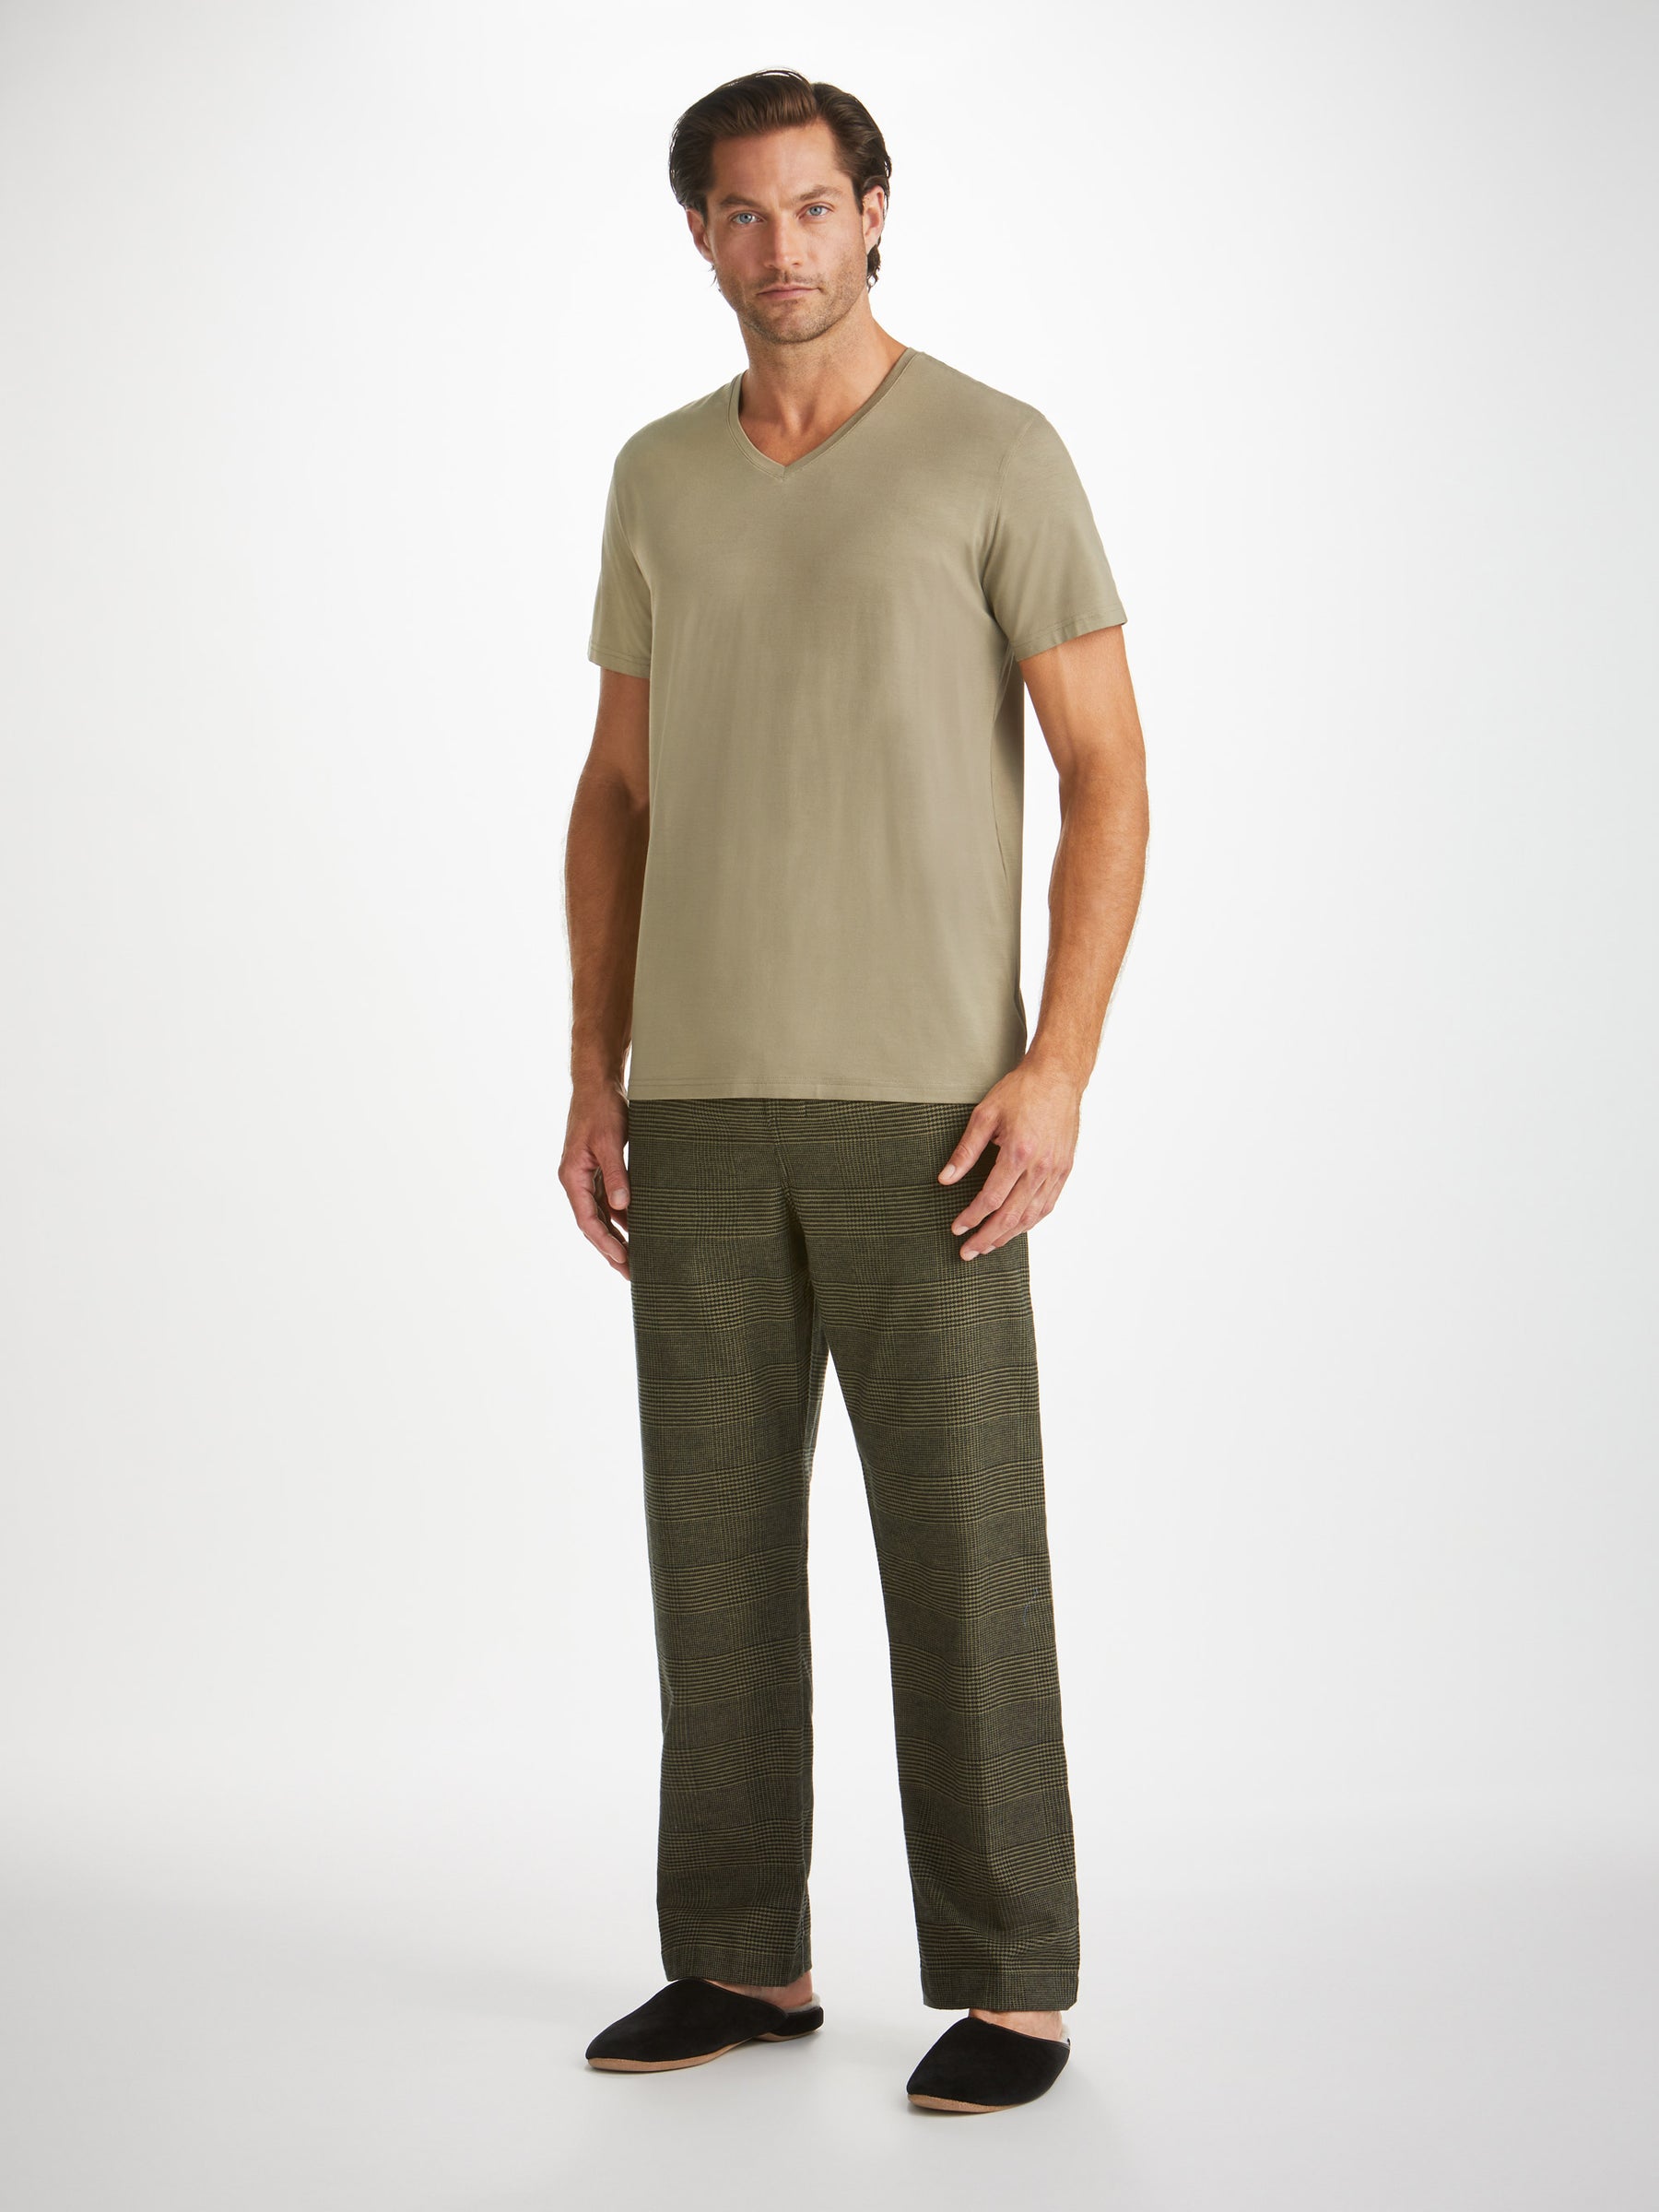 Men's V-Neck T-Shirt Basel Micro Modal Stretch Khaki